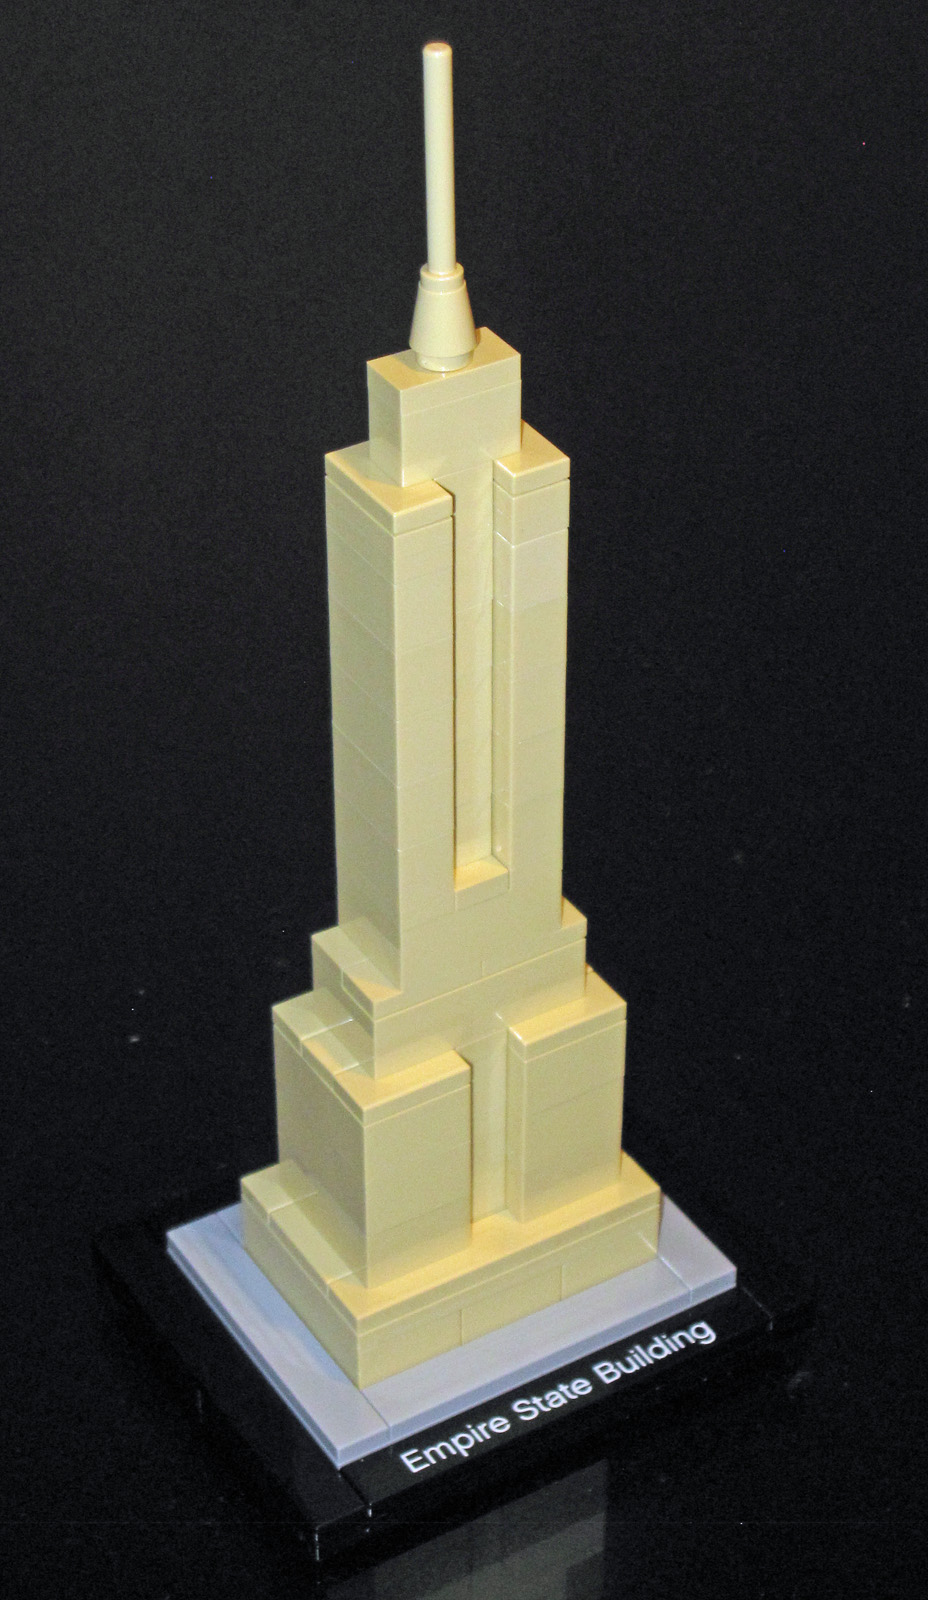 Lego_Architecture_21002_-_Empire_State_Building_(6981132780)